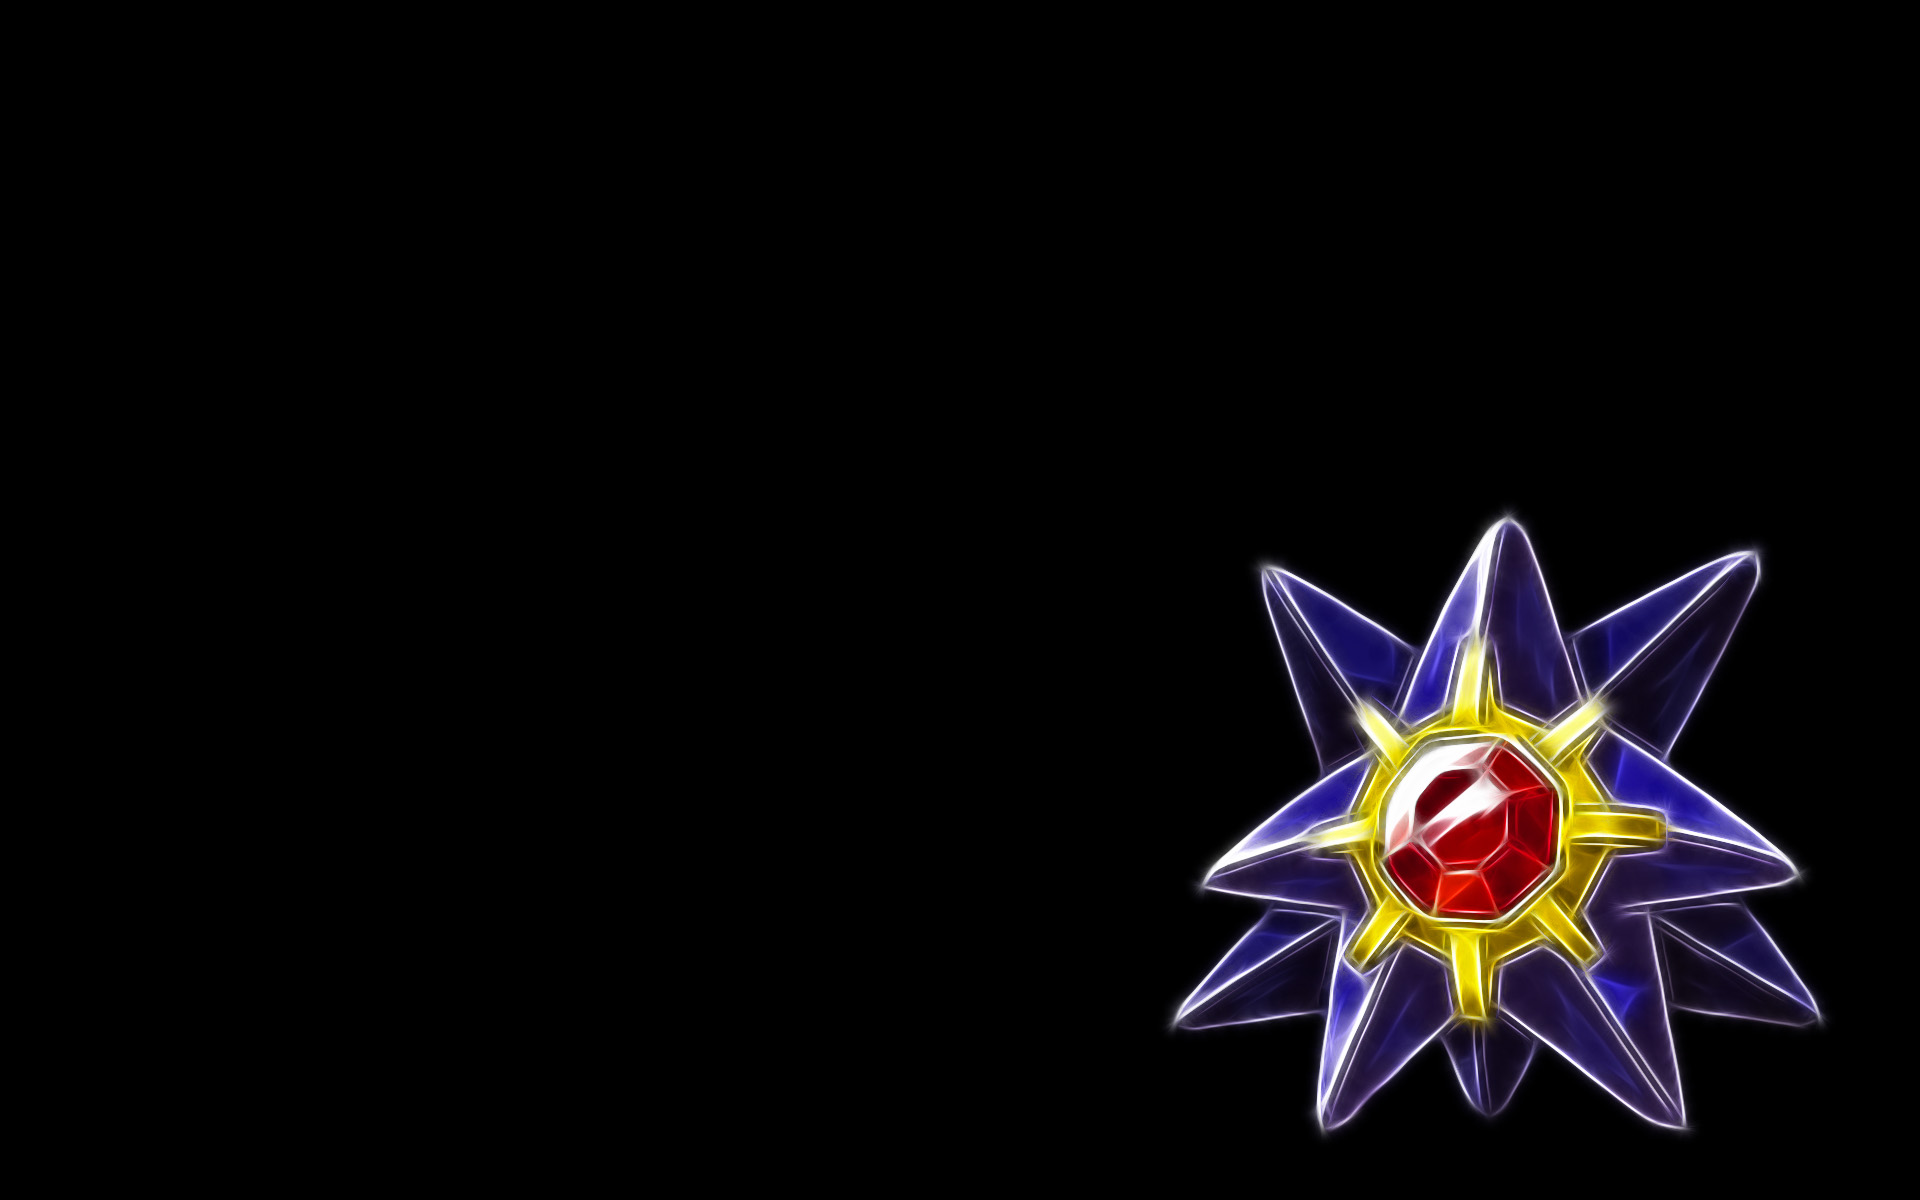 Starmie, a Water-type Pokémon, from the Anime, Pokémon, portrayed as a desktop wallpaper.